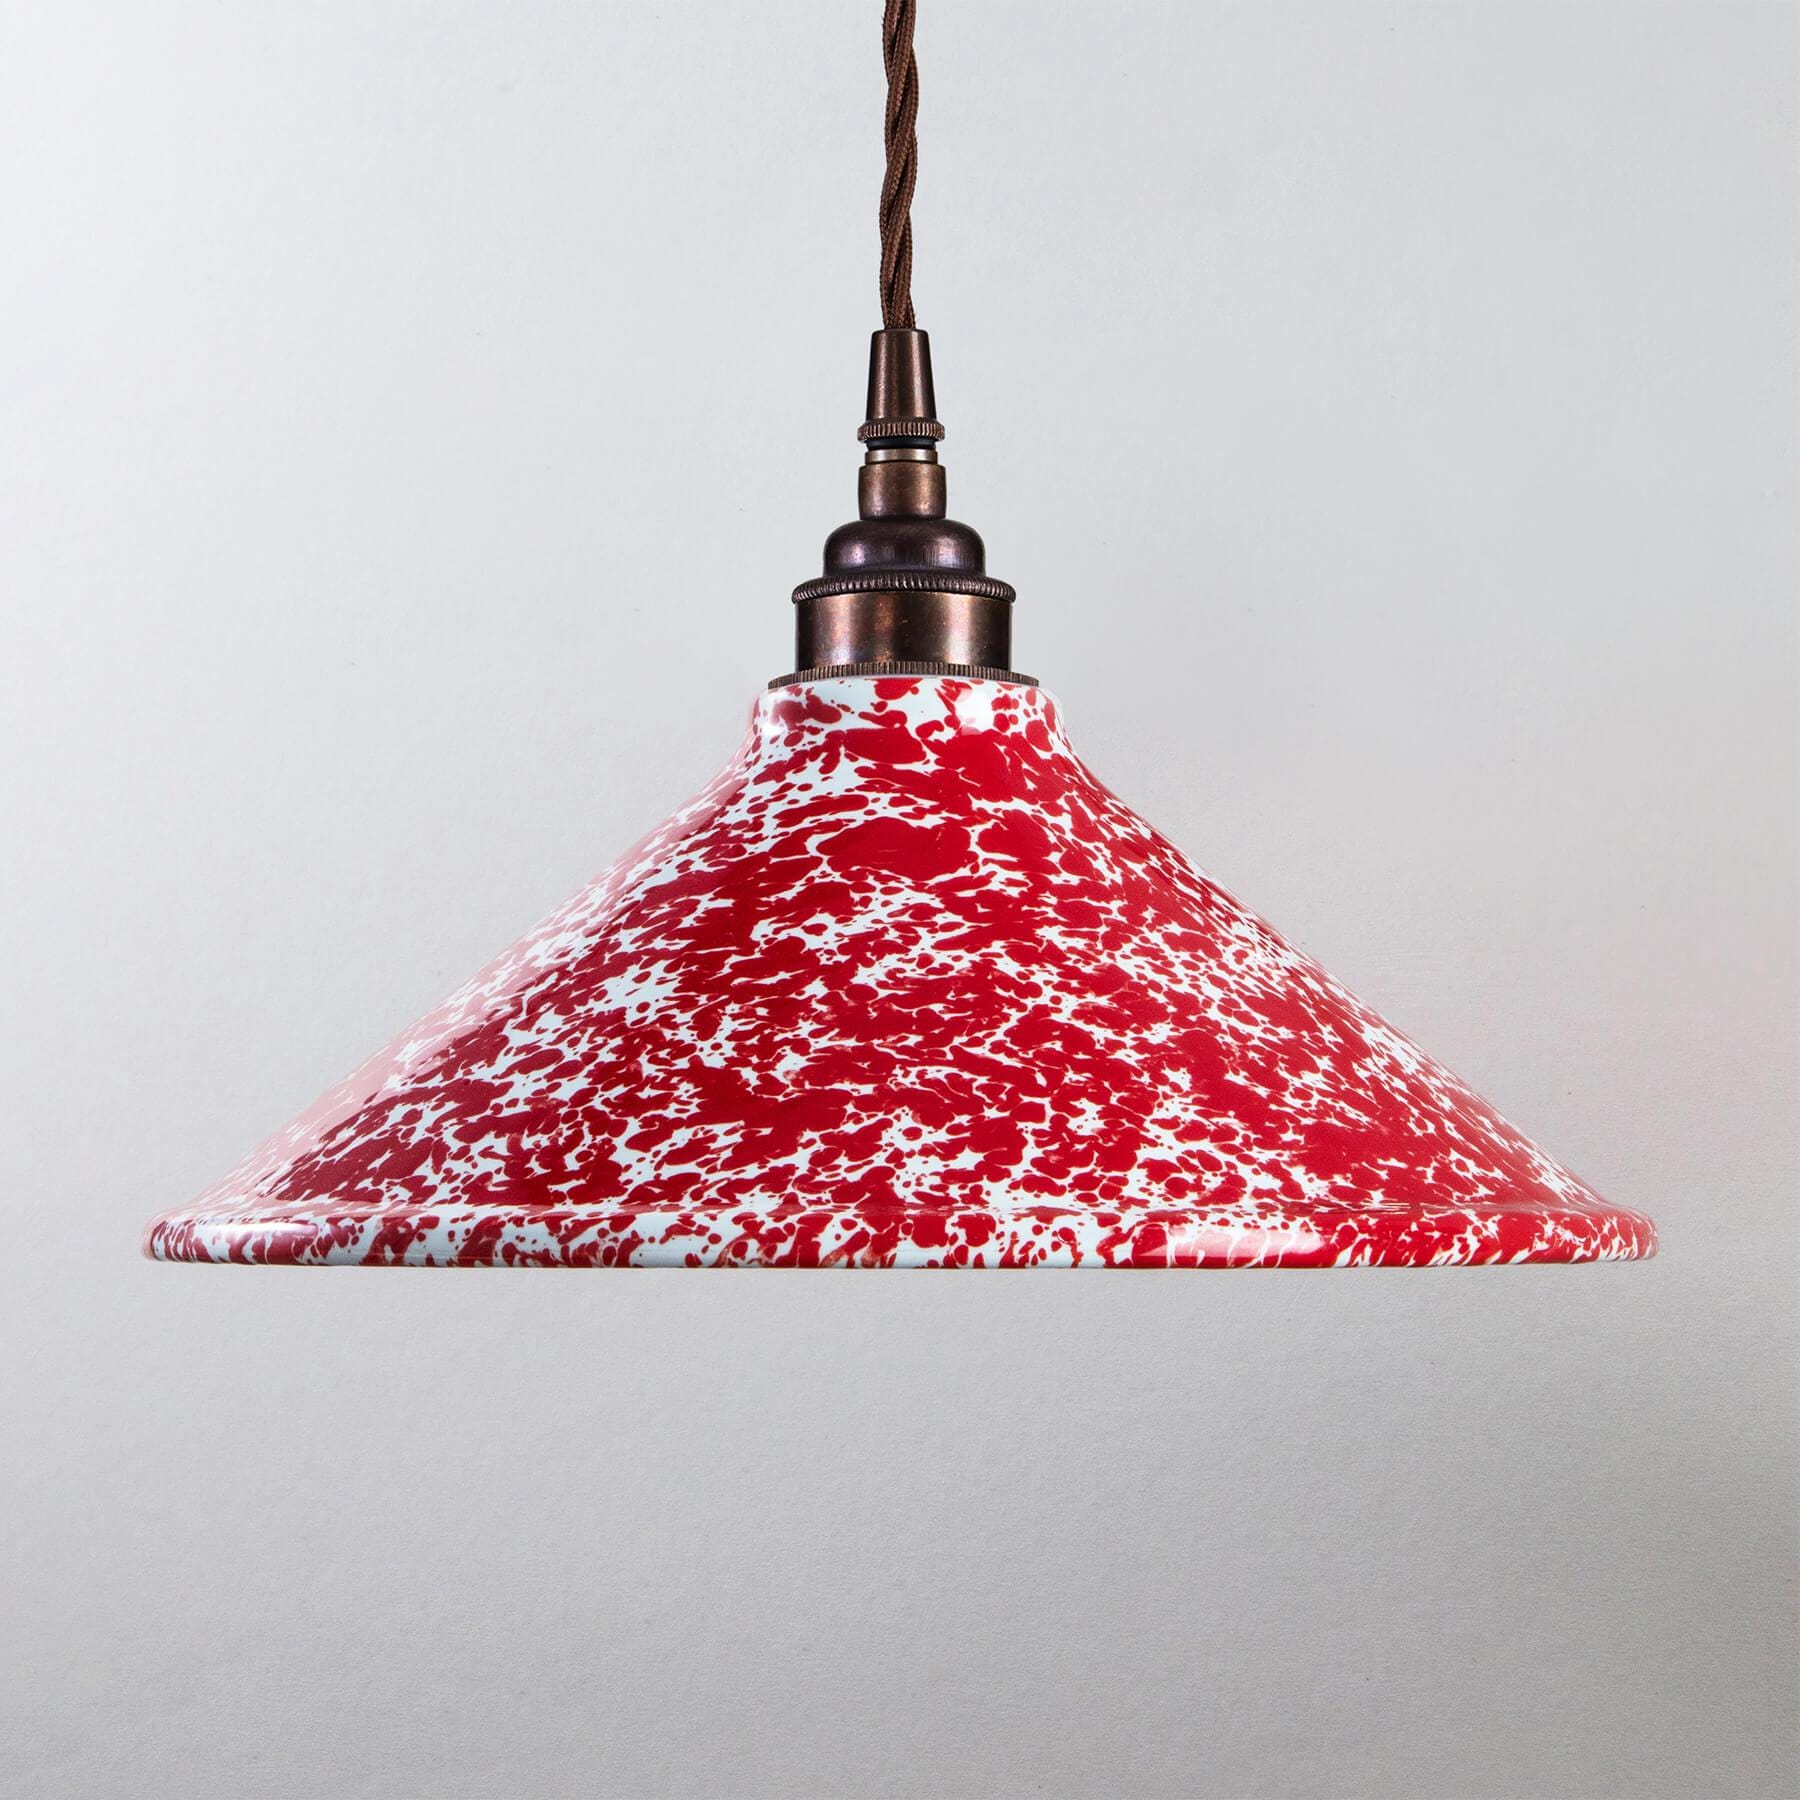 Old School Electric Splatter Wear Pendant Light Red Shade Antique Brass Fittings Designer Pendant Lighting